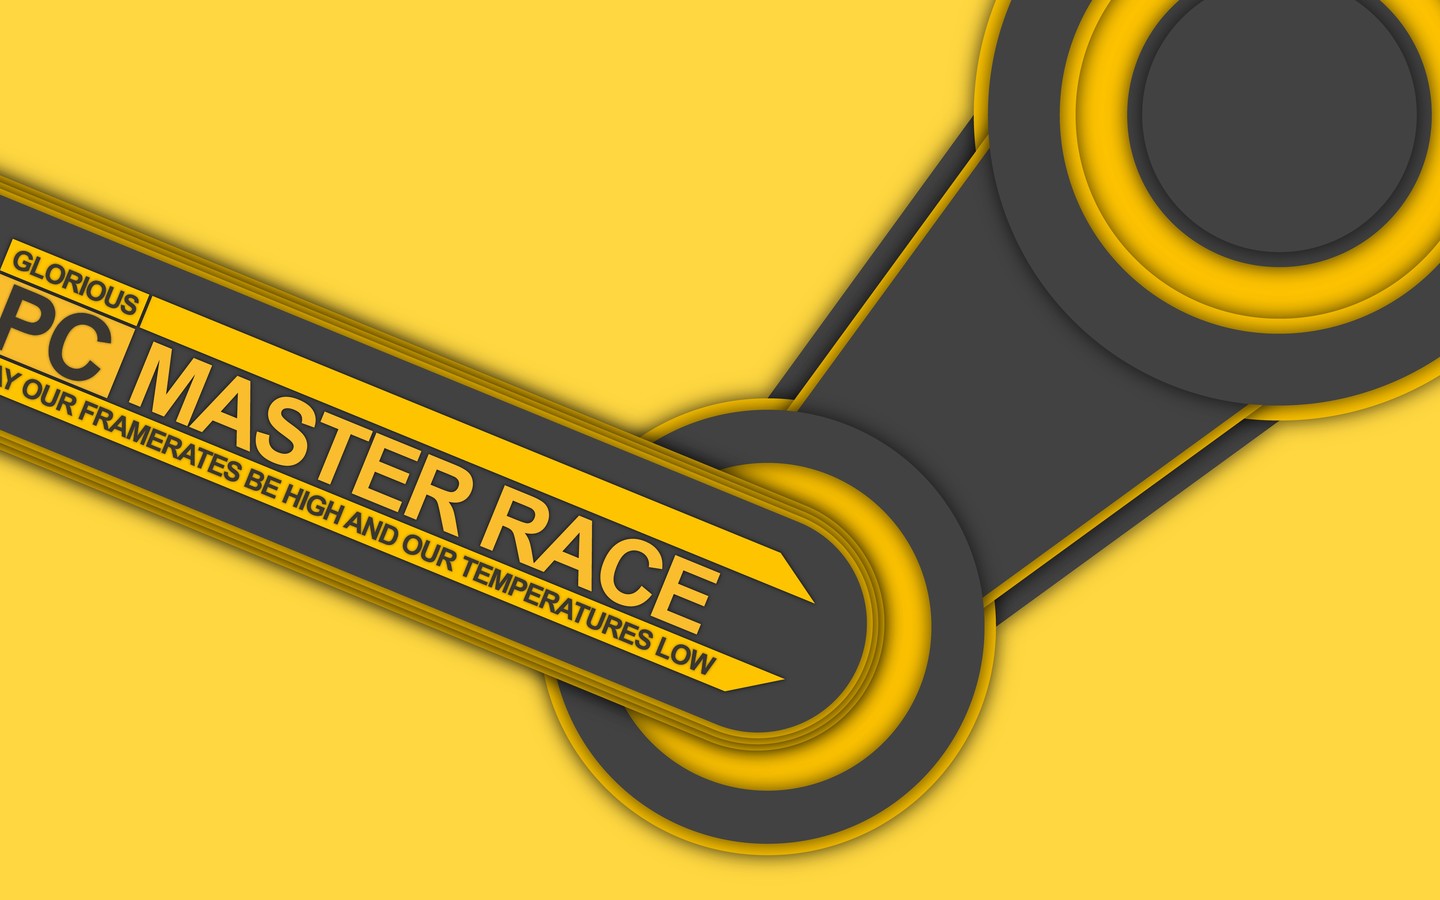 Gaming Pc Master Race Wallpaper